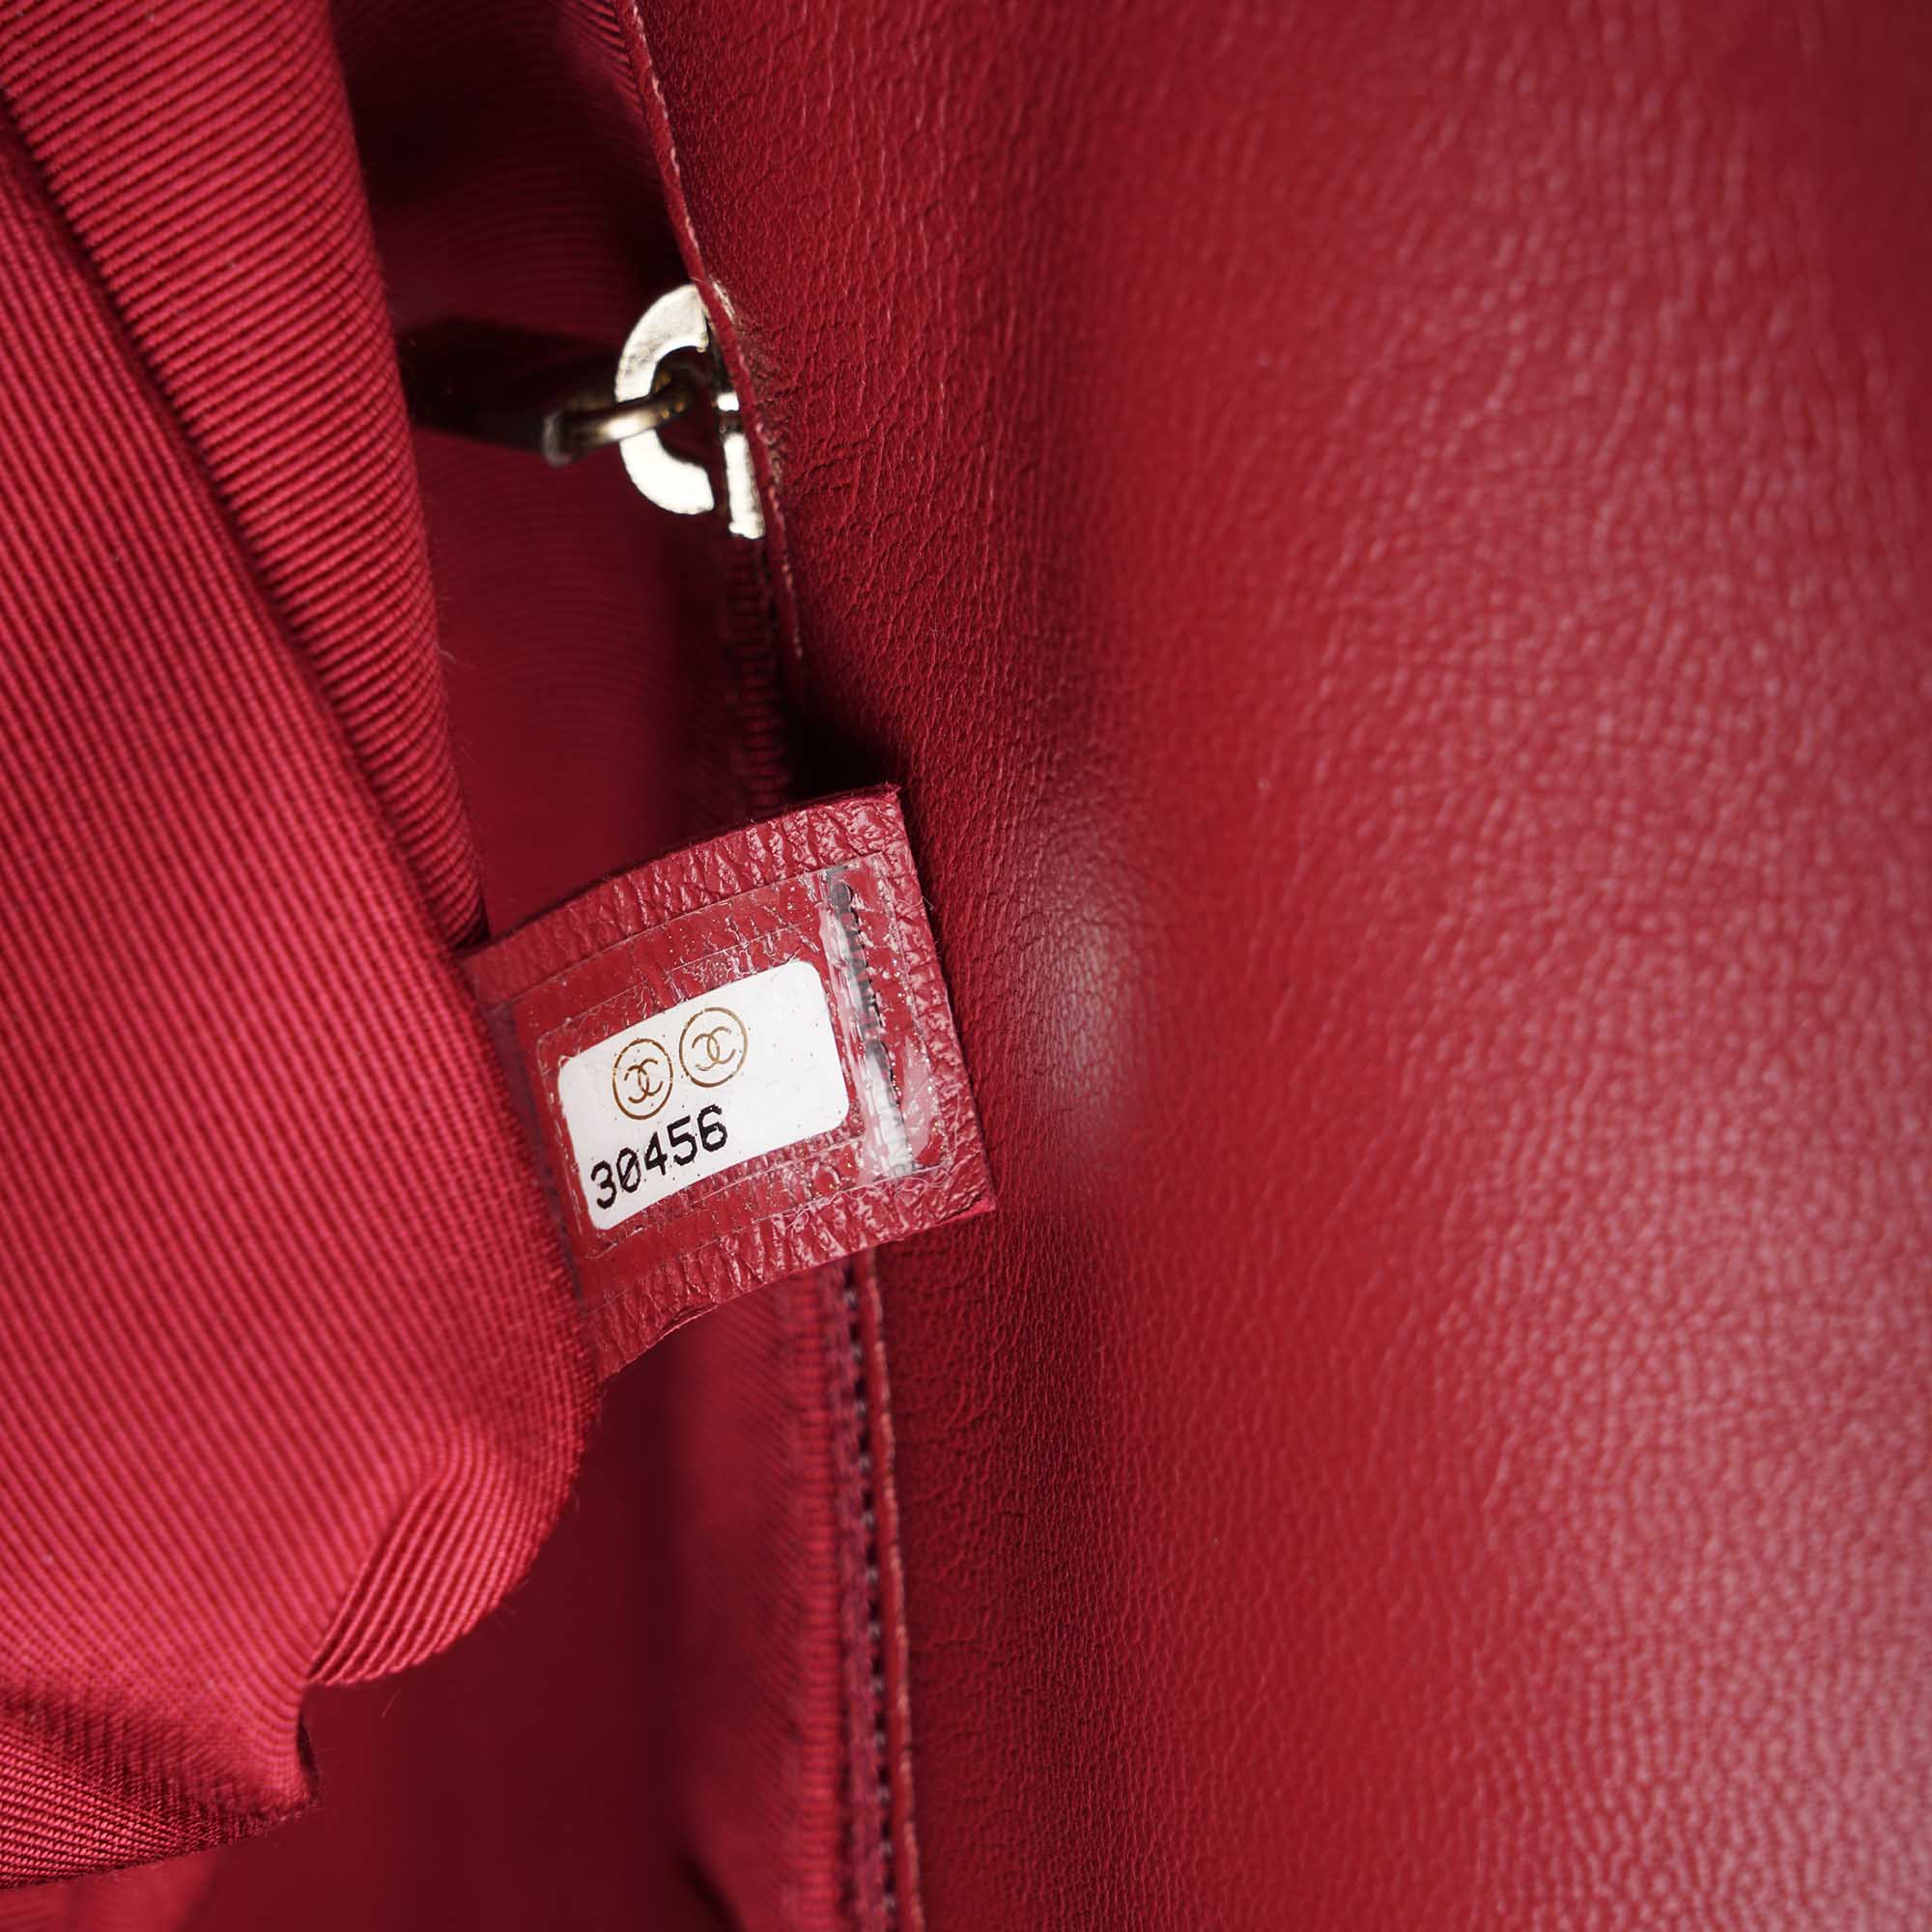 19 Large Flap Bag - CHANEL - Affordable Luxury image